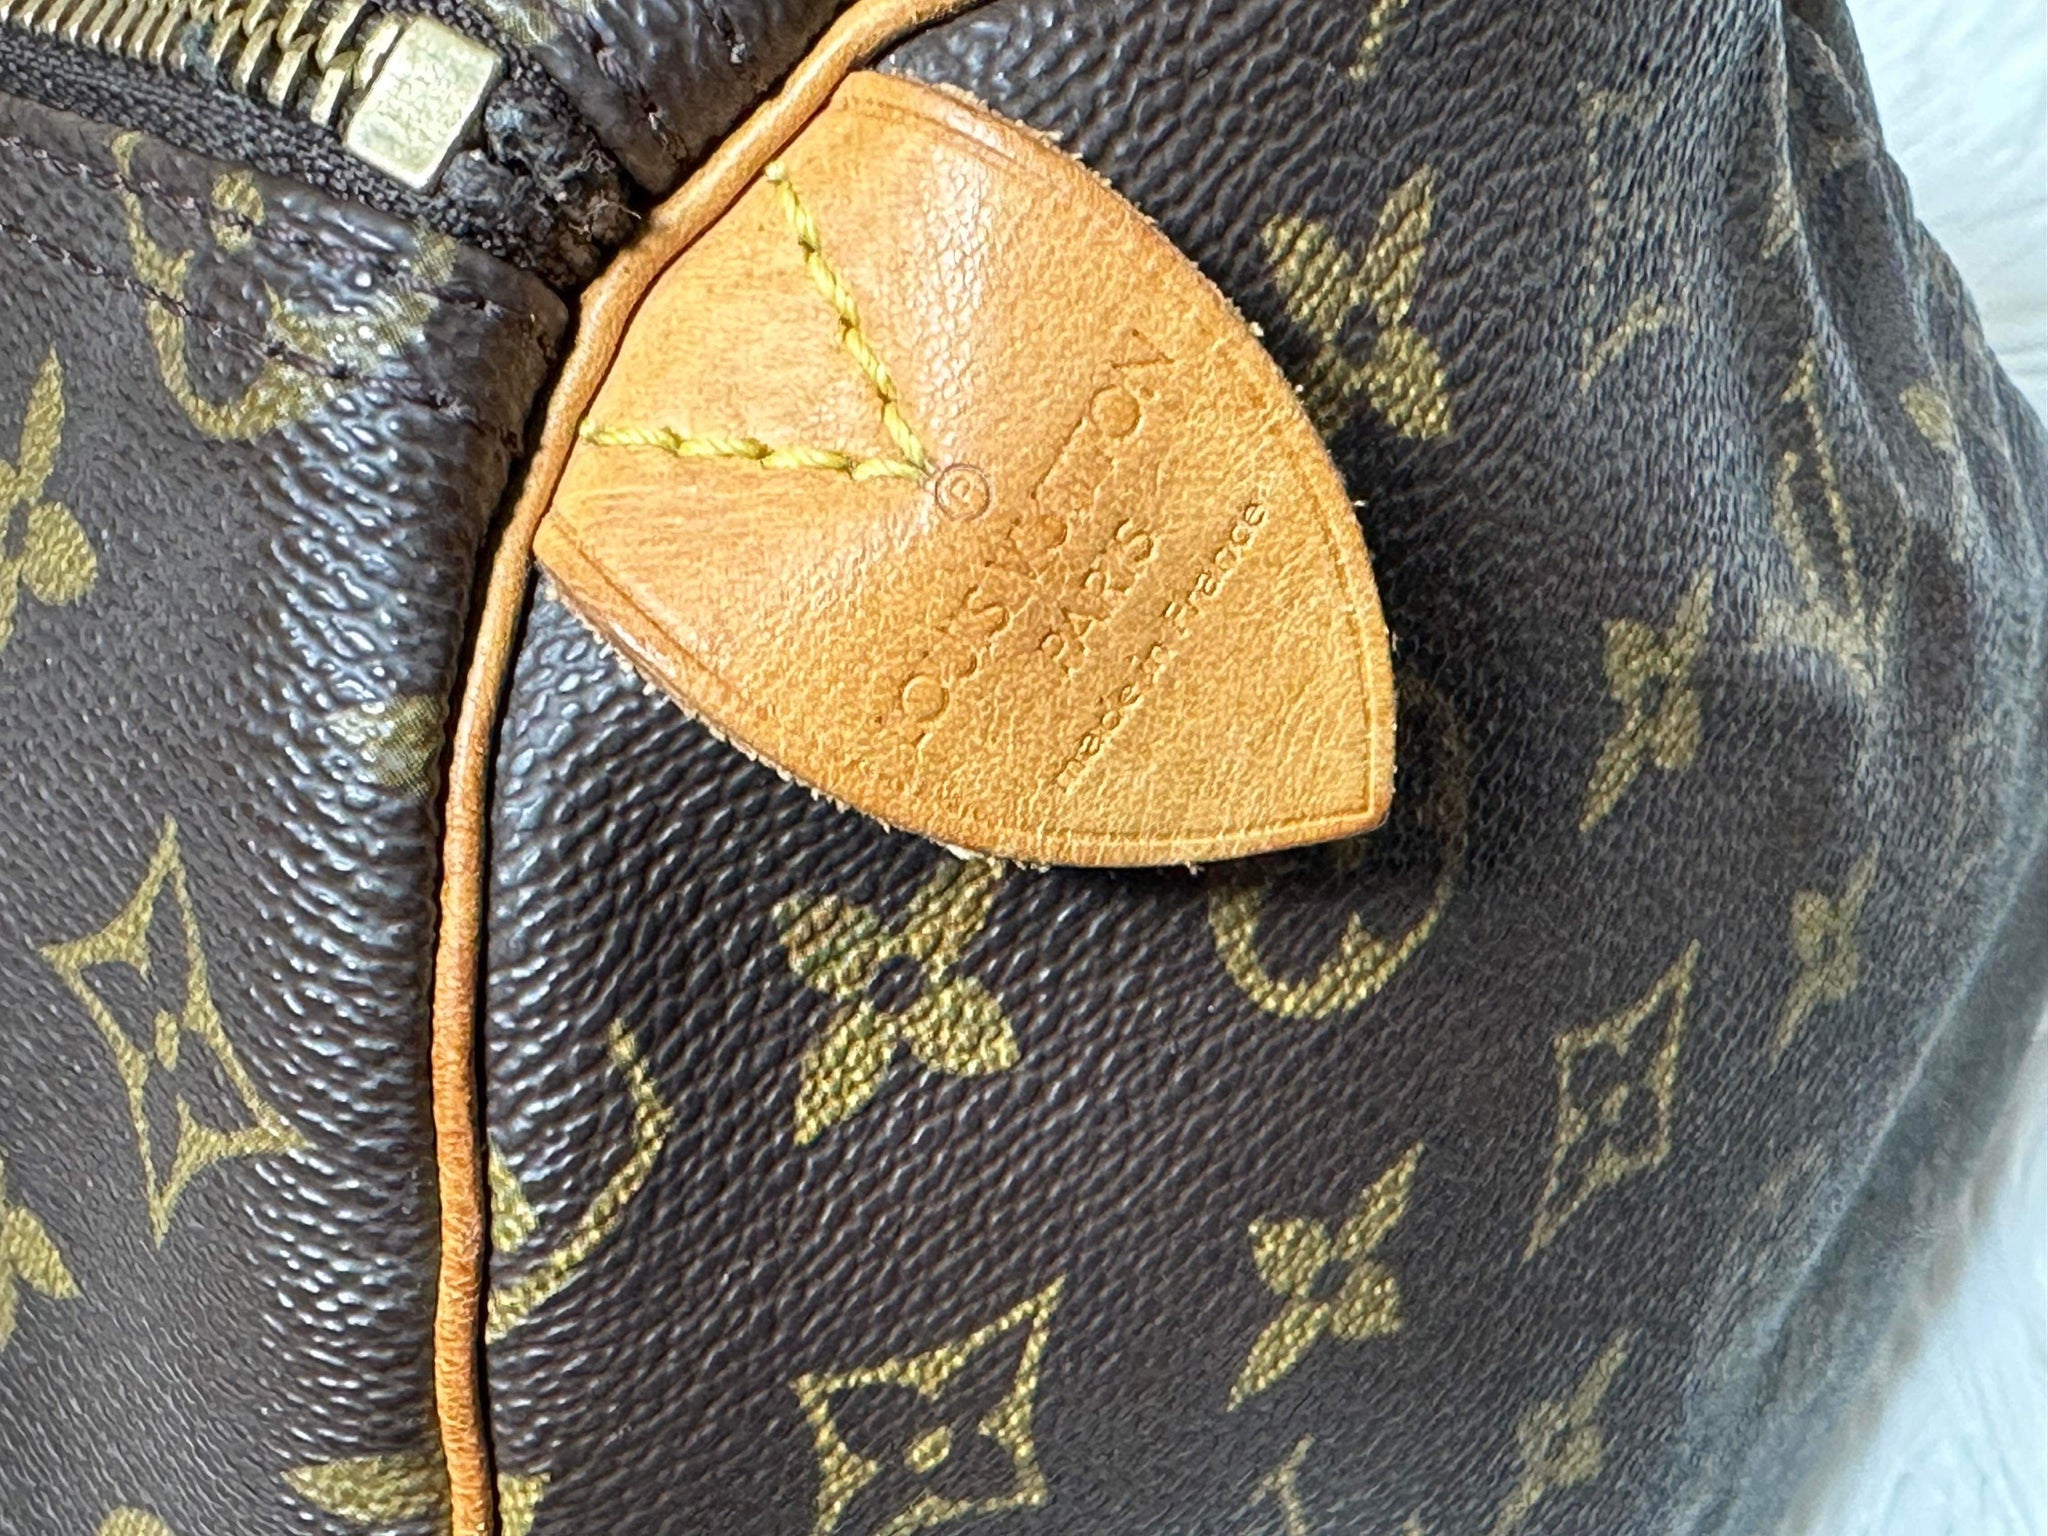 Louis Vuitton, Bags, Louis Vuitton Speedy 35